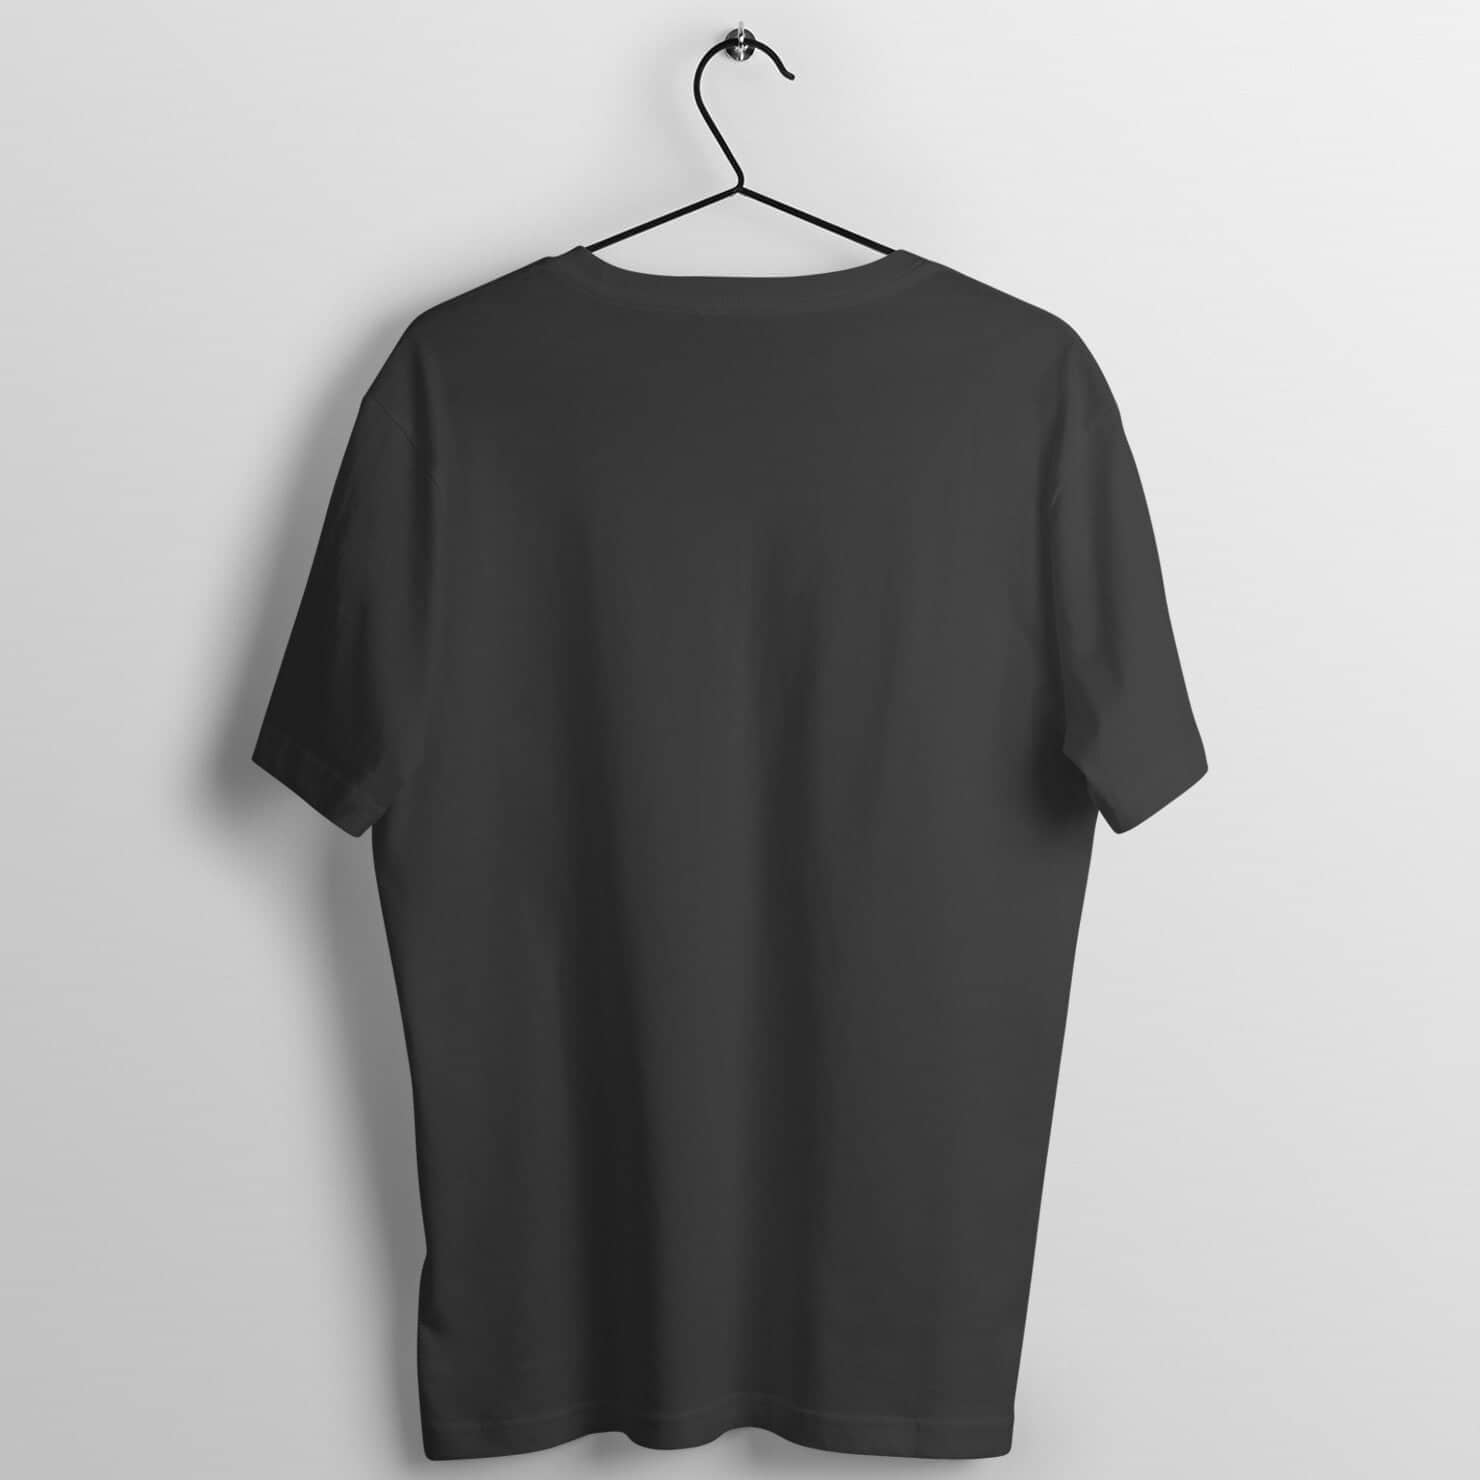 Apna Weekend Aayega Exclusive Black T Shirt for Men and Women Printrove 